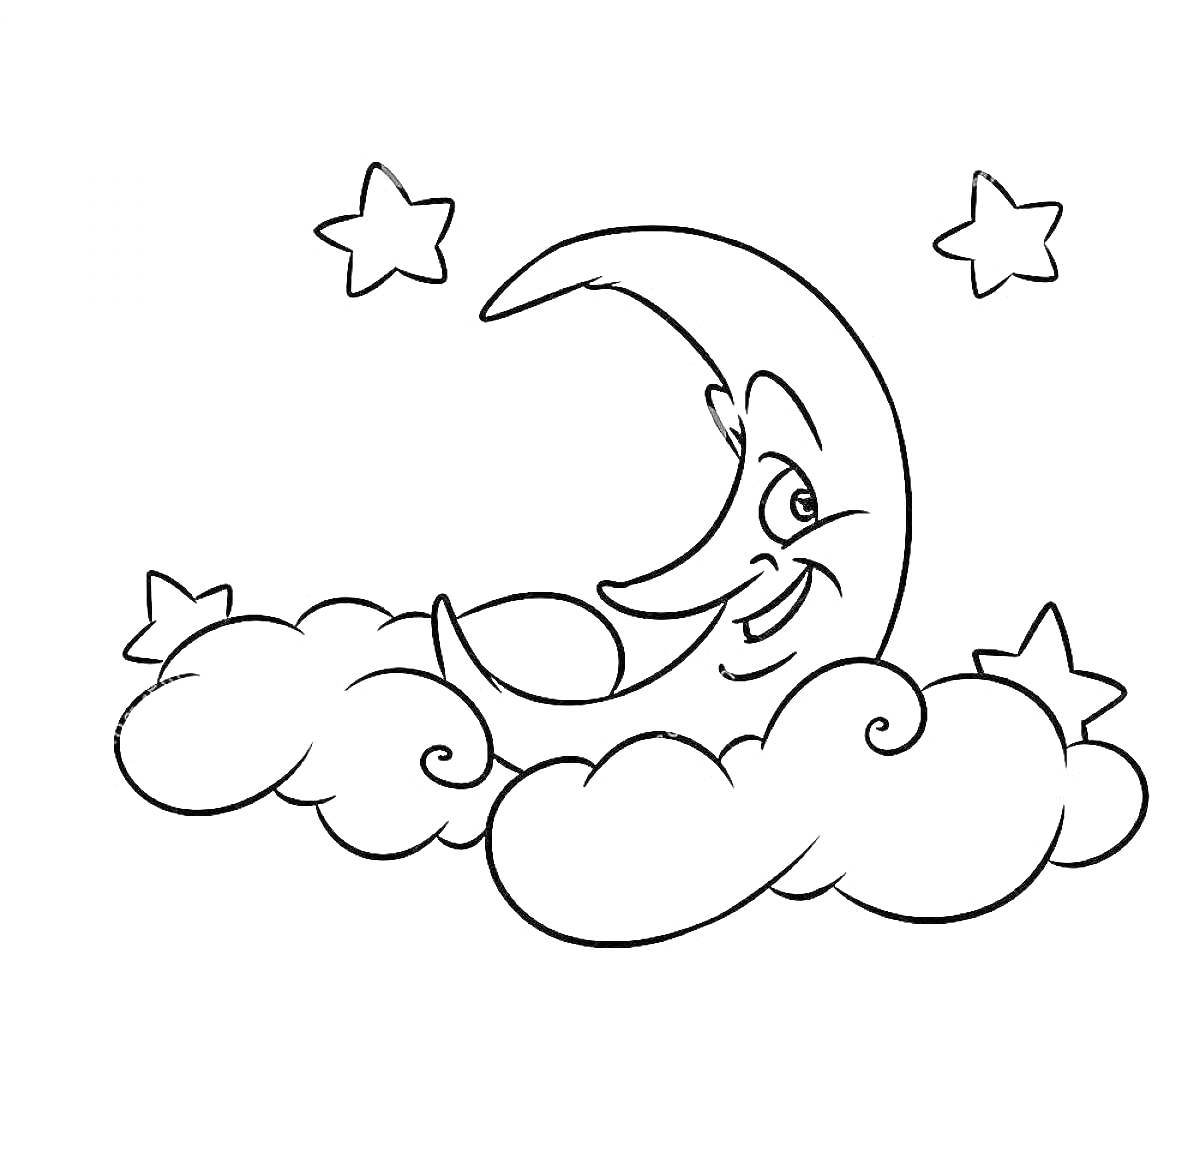 Раскраска Месяц среди облаков и звезд